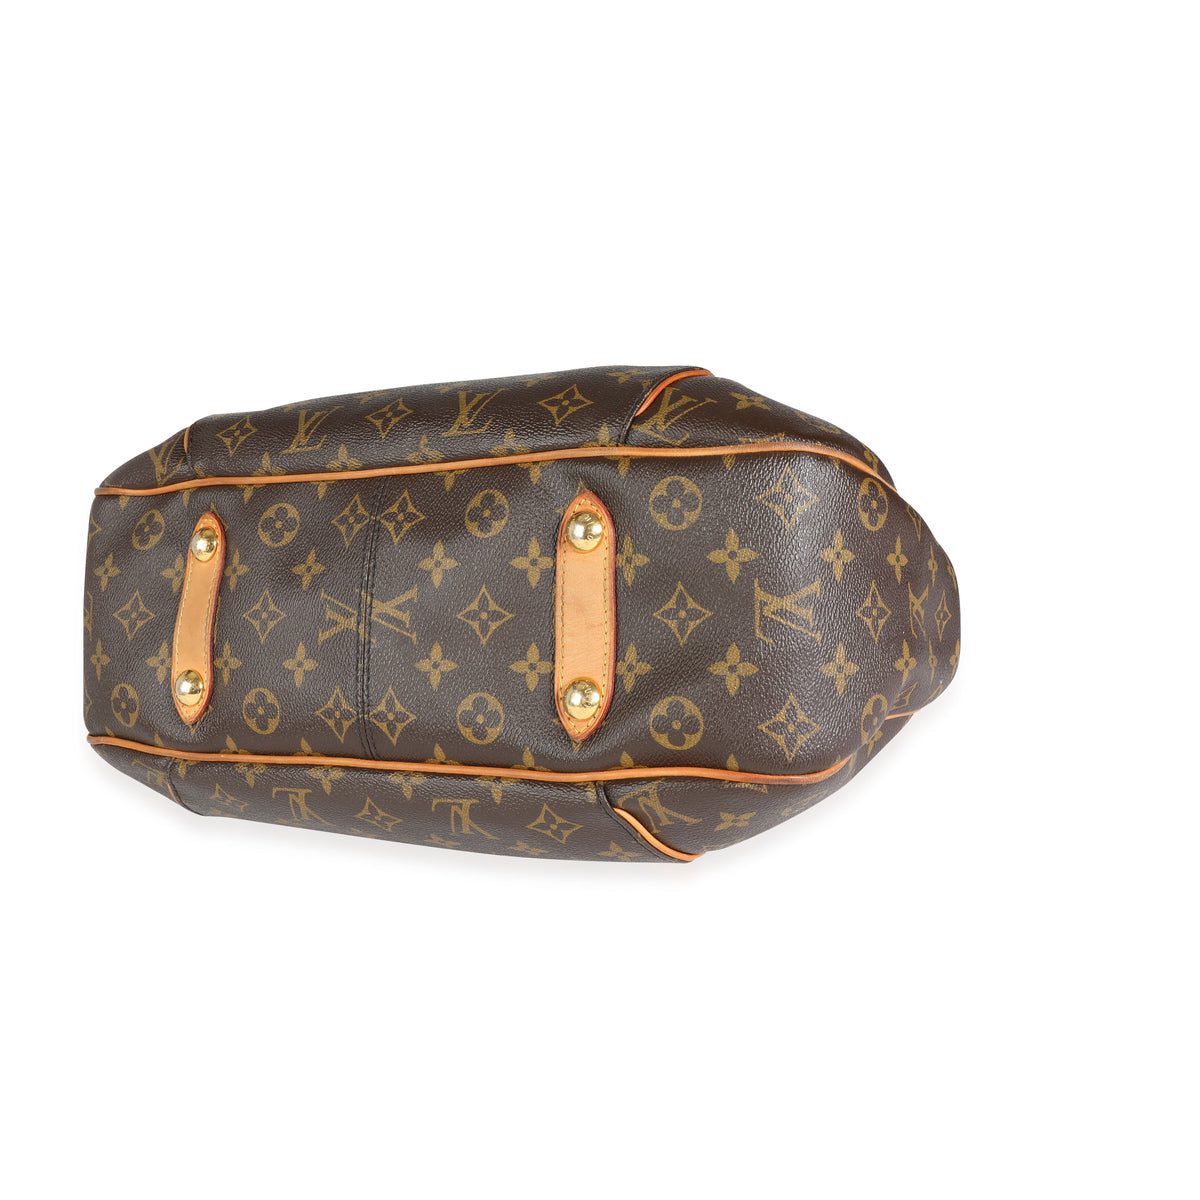 2 Louis Vuitton Shopping bags 11.5 x 15.5